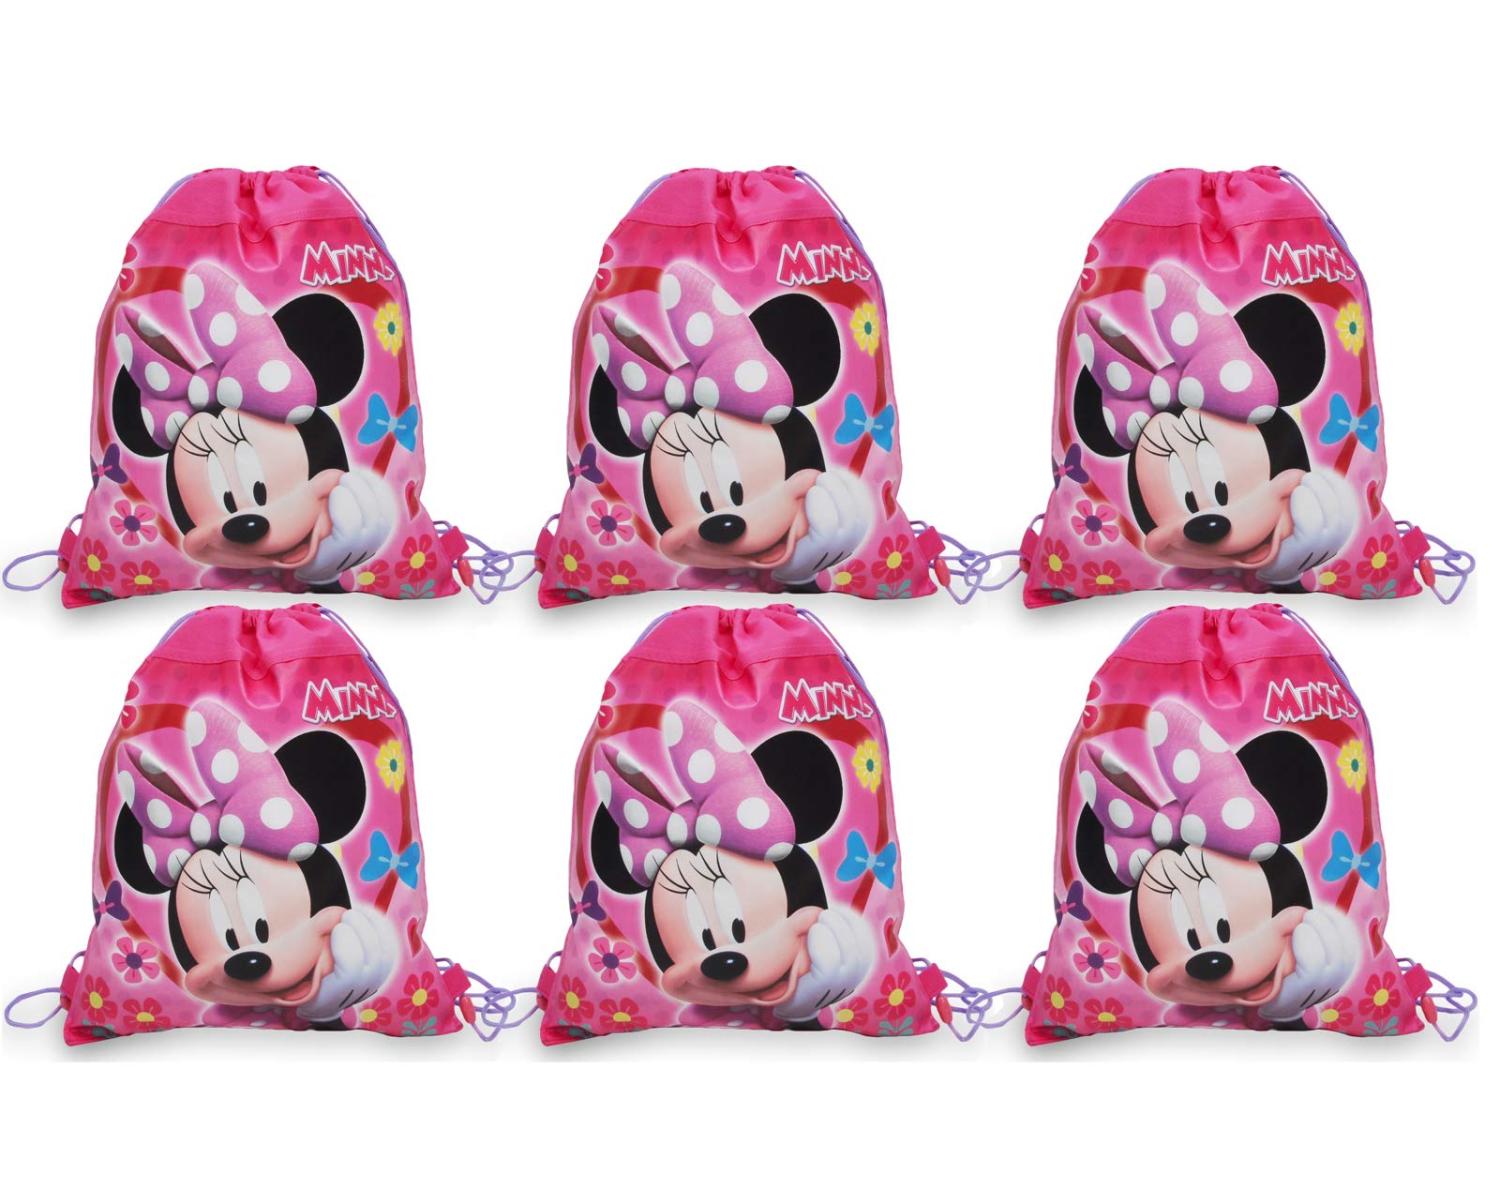 Disney Minnie Mouse Sling Bag